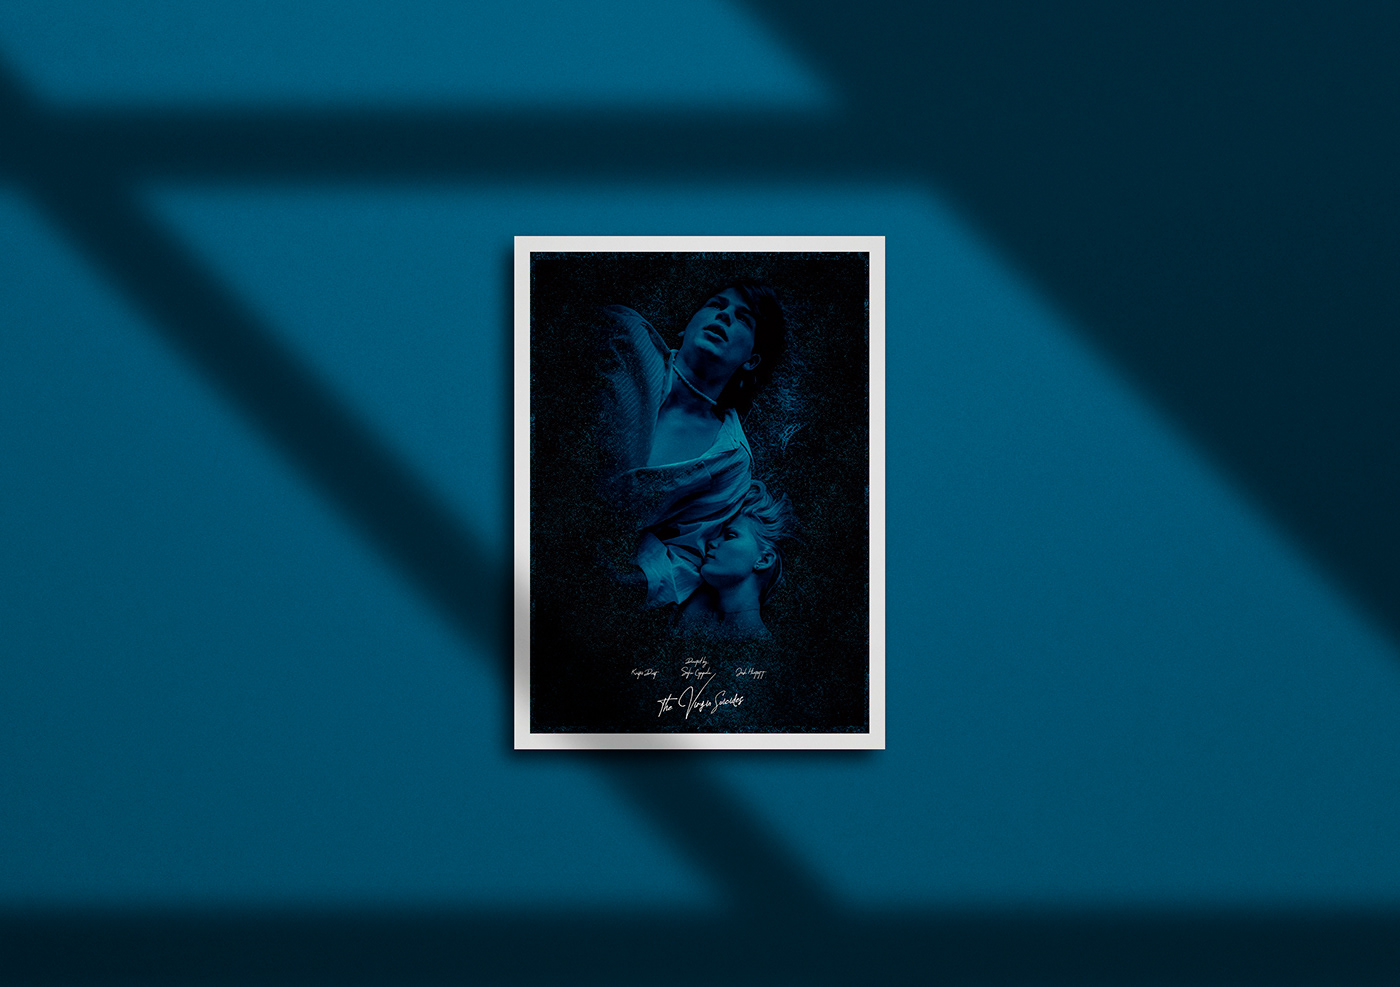 Kirsten Dunst Cinema movie poster alternative movie poster design Graphic Designer sofia coppola The Virgin Suicides